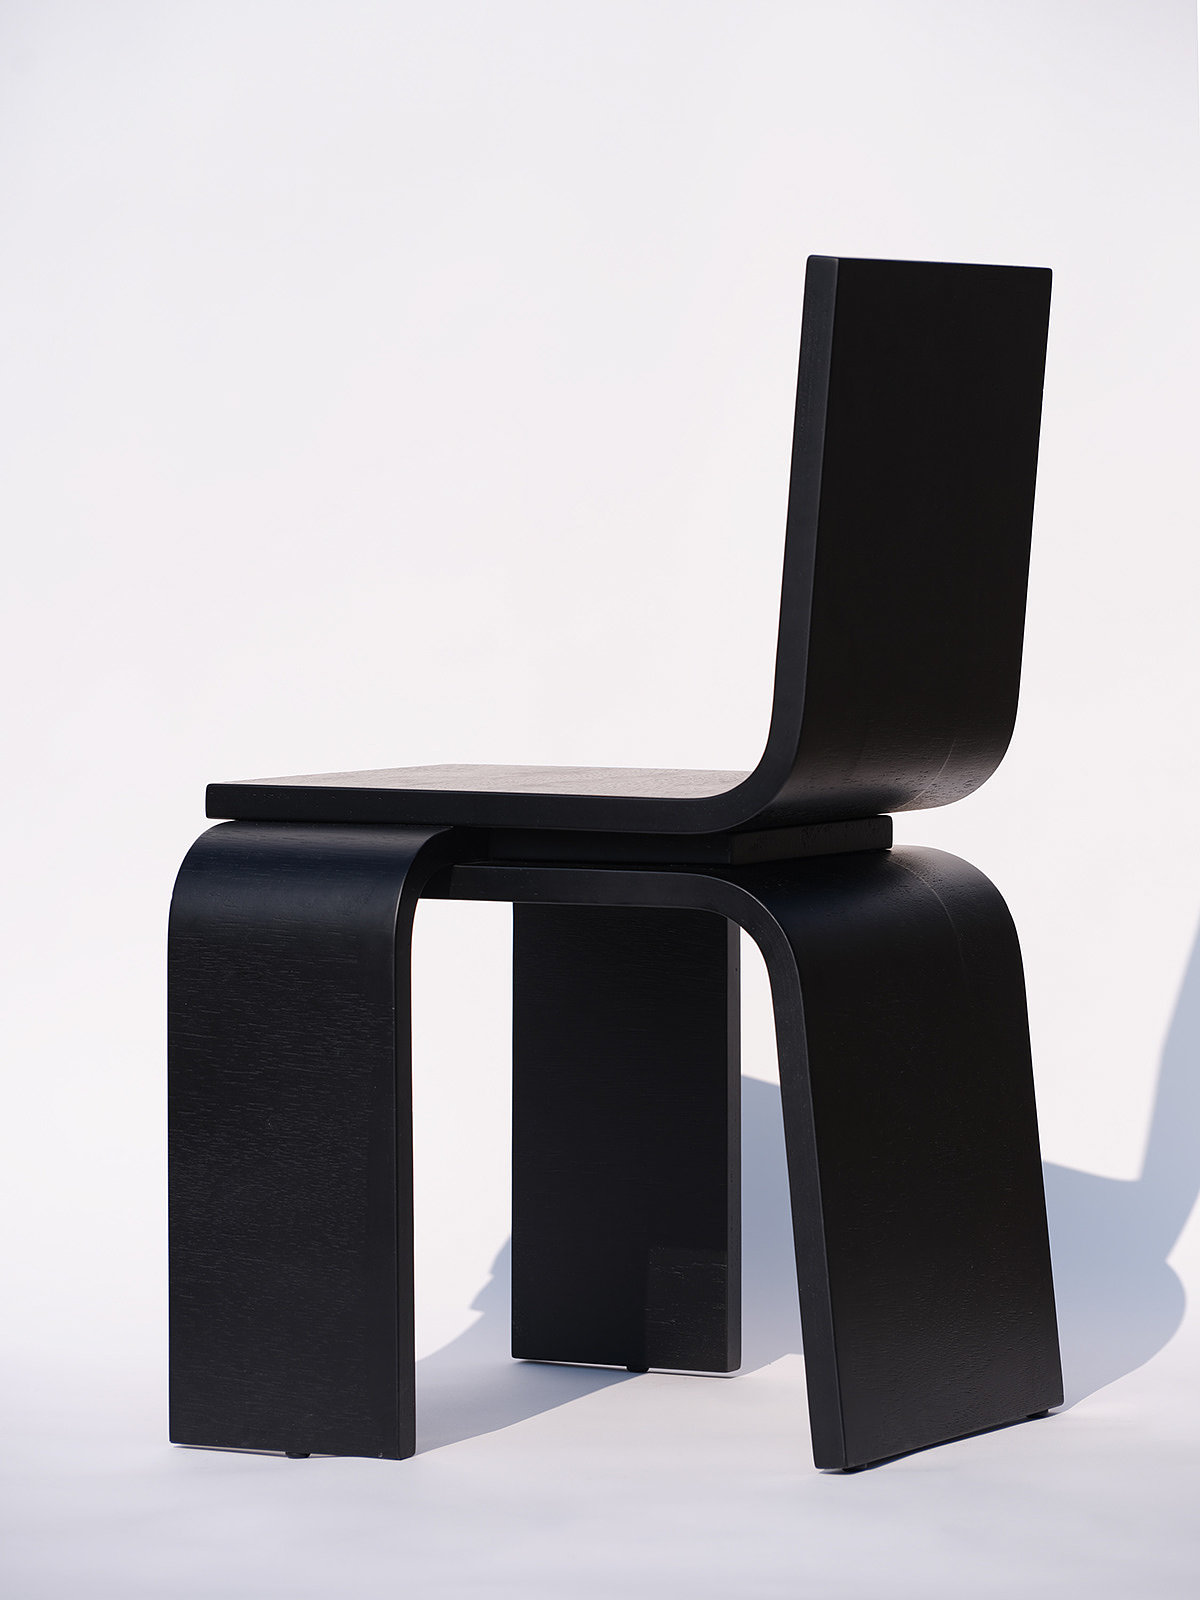 SJ PARK，椅子设计，产品设计，人体工程学，vel chair，可拼装设计，